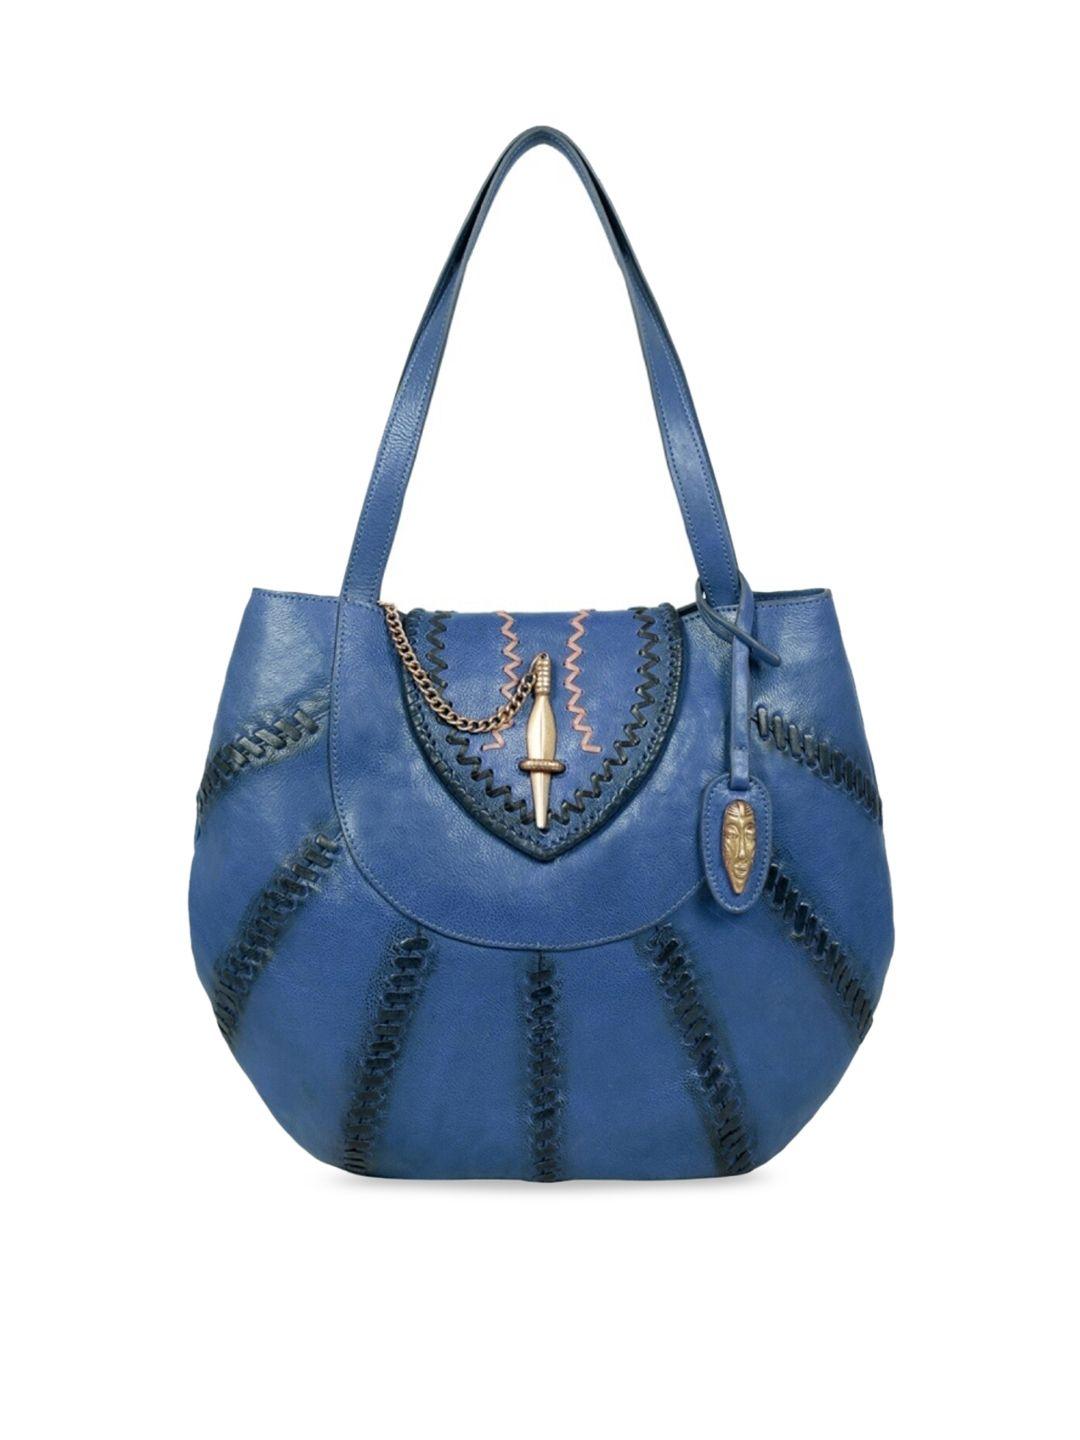 hidesign blue textured leather structured handheld bag